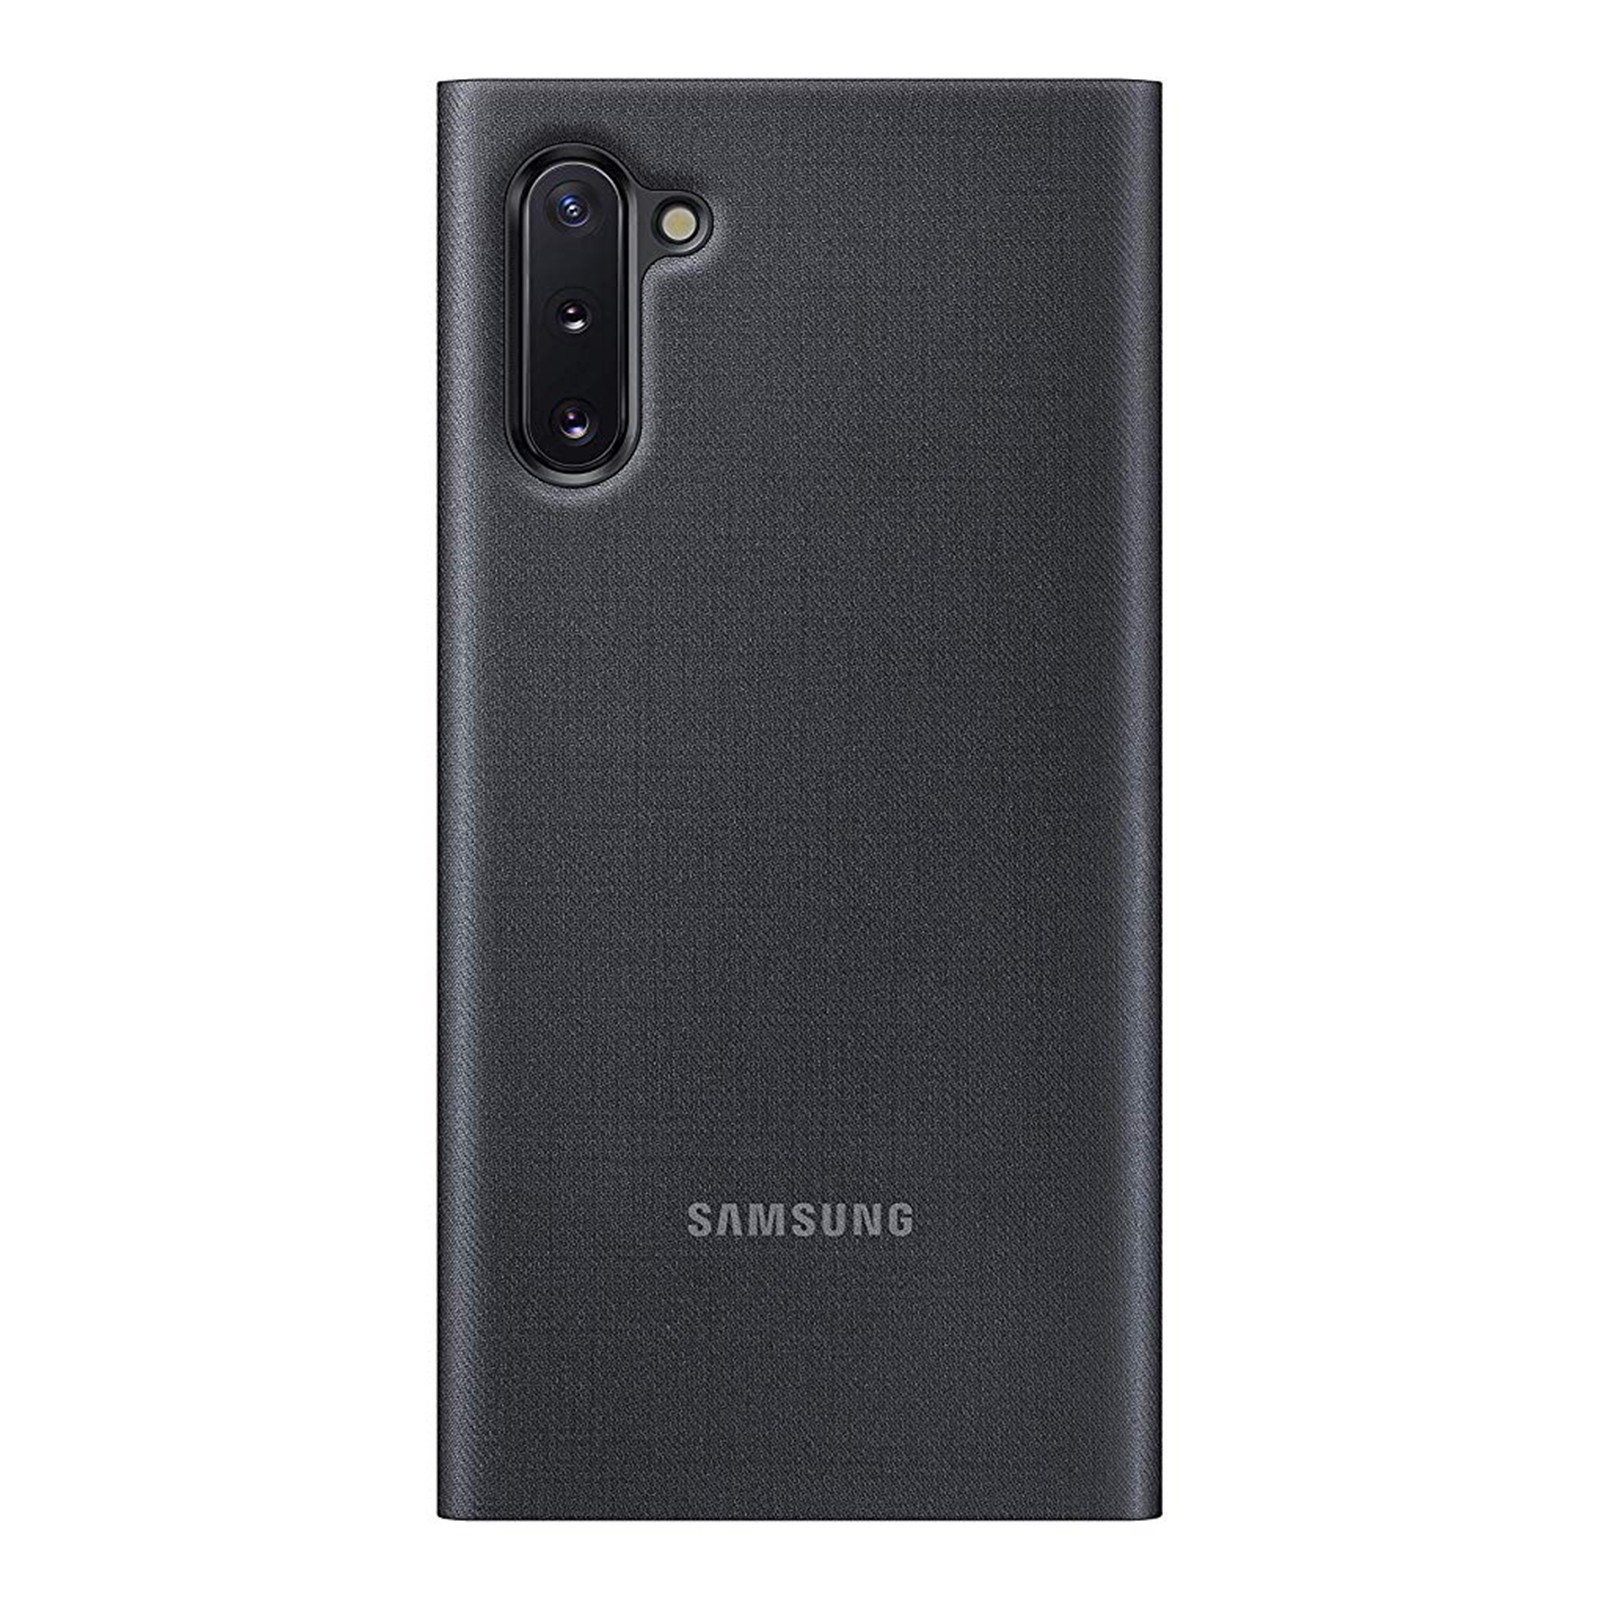 SAMSUNG NOTE Samsung, Galaxy COVER BLACK, 10, EF-NN970PBEGWW Reisekoffer, GAL. LED 10 Schwarz VIEW Note